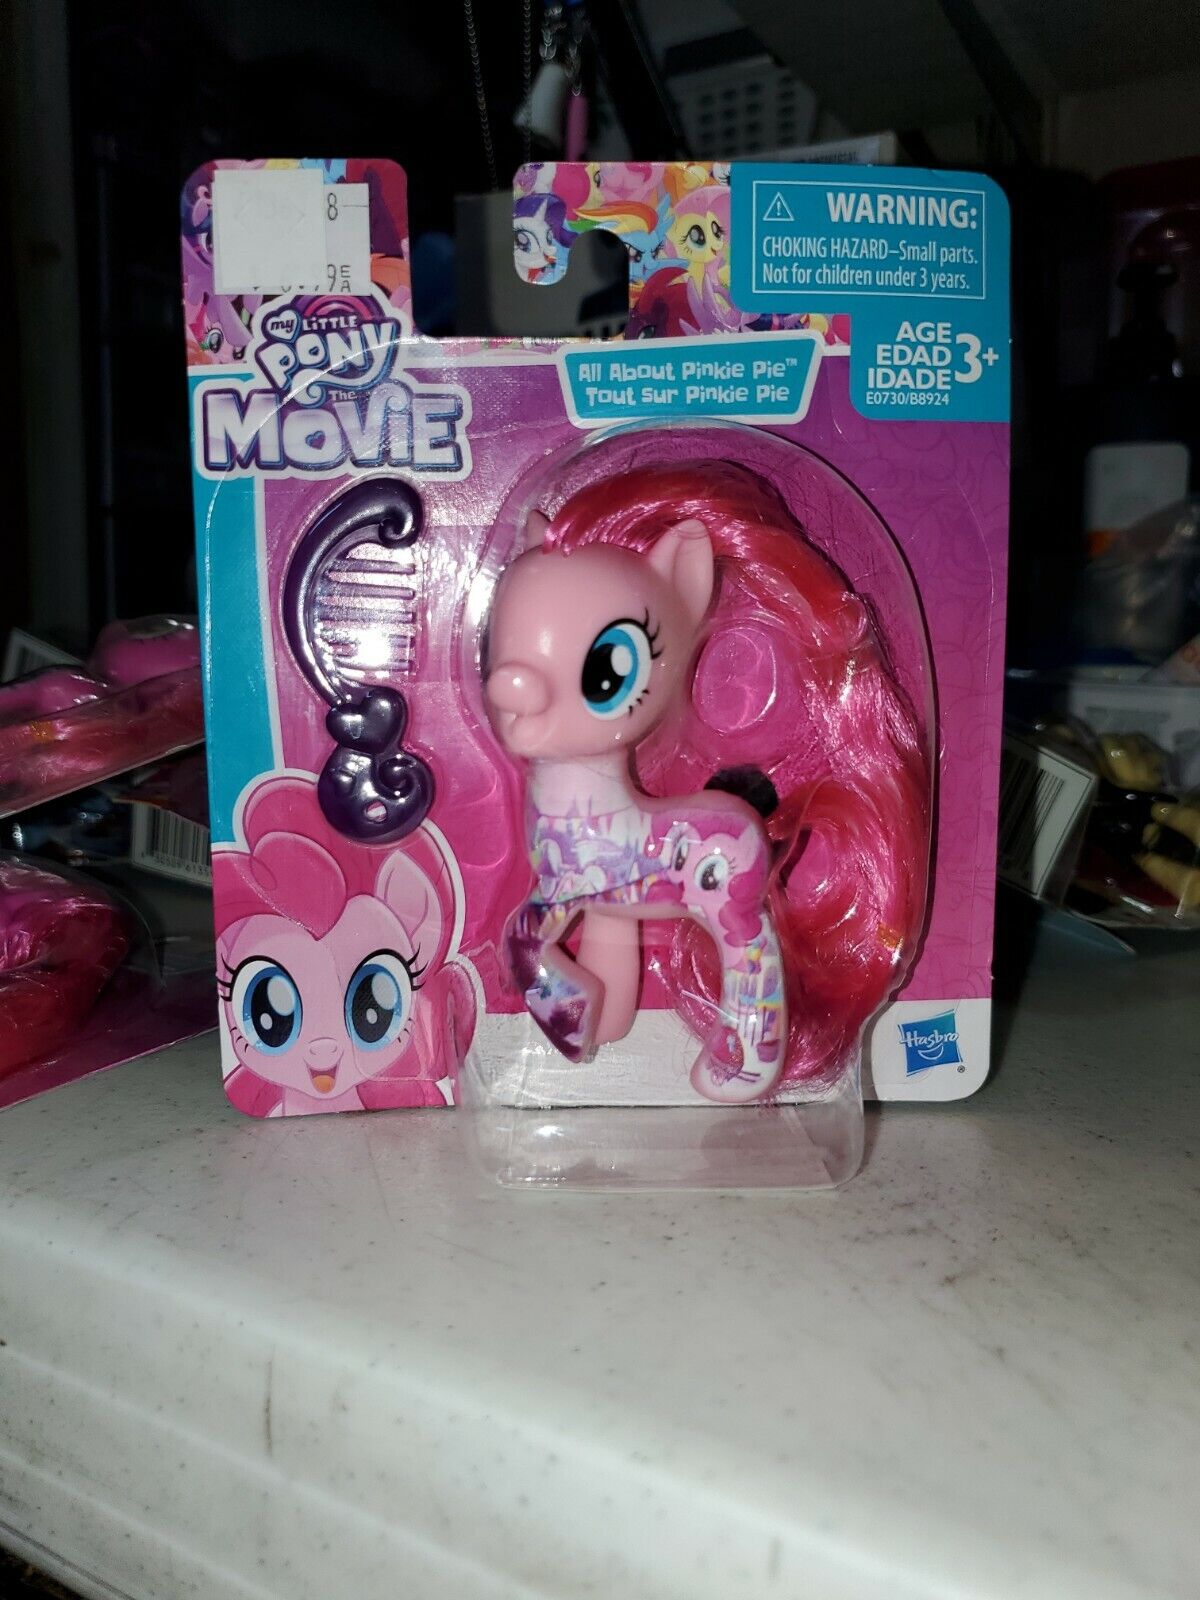 My Little Pony The Movie Pinkie Pie Mini Figure